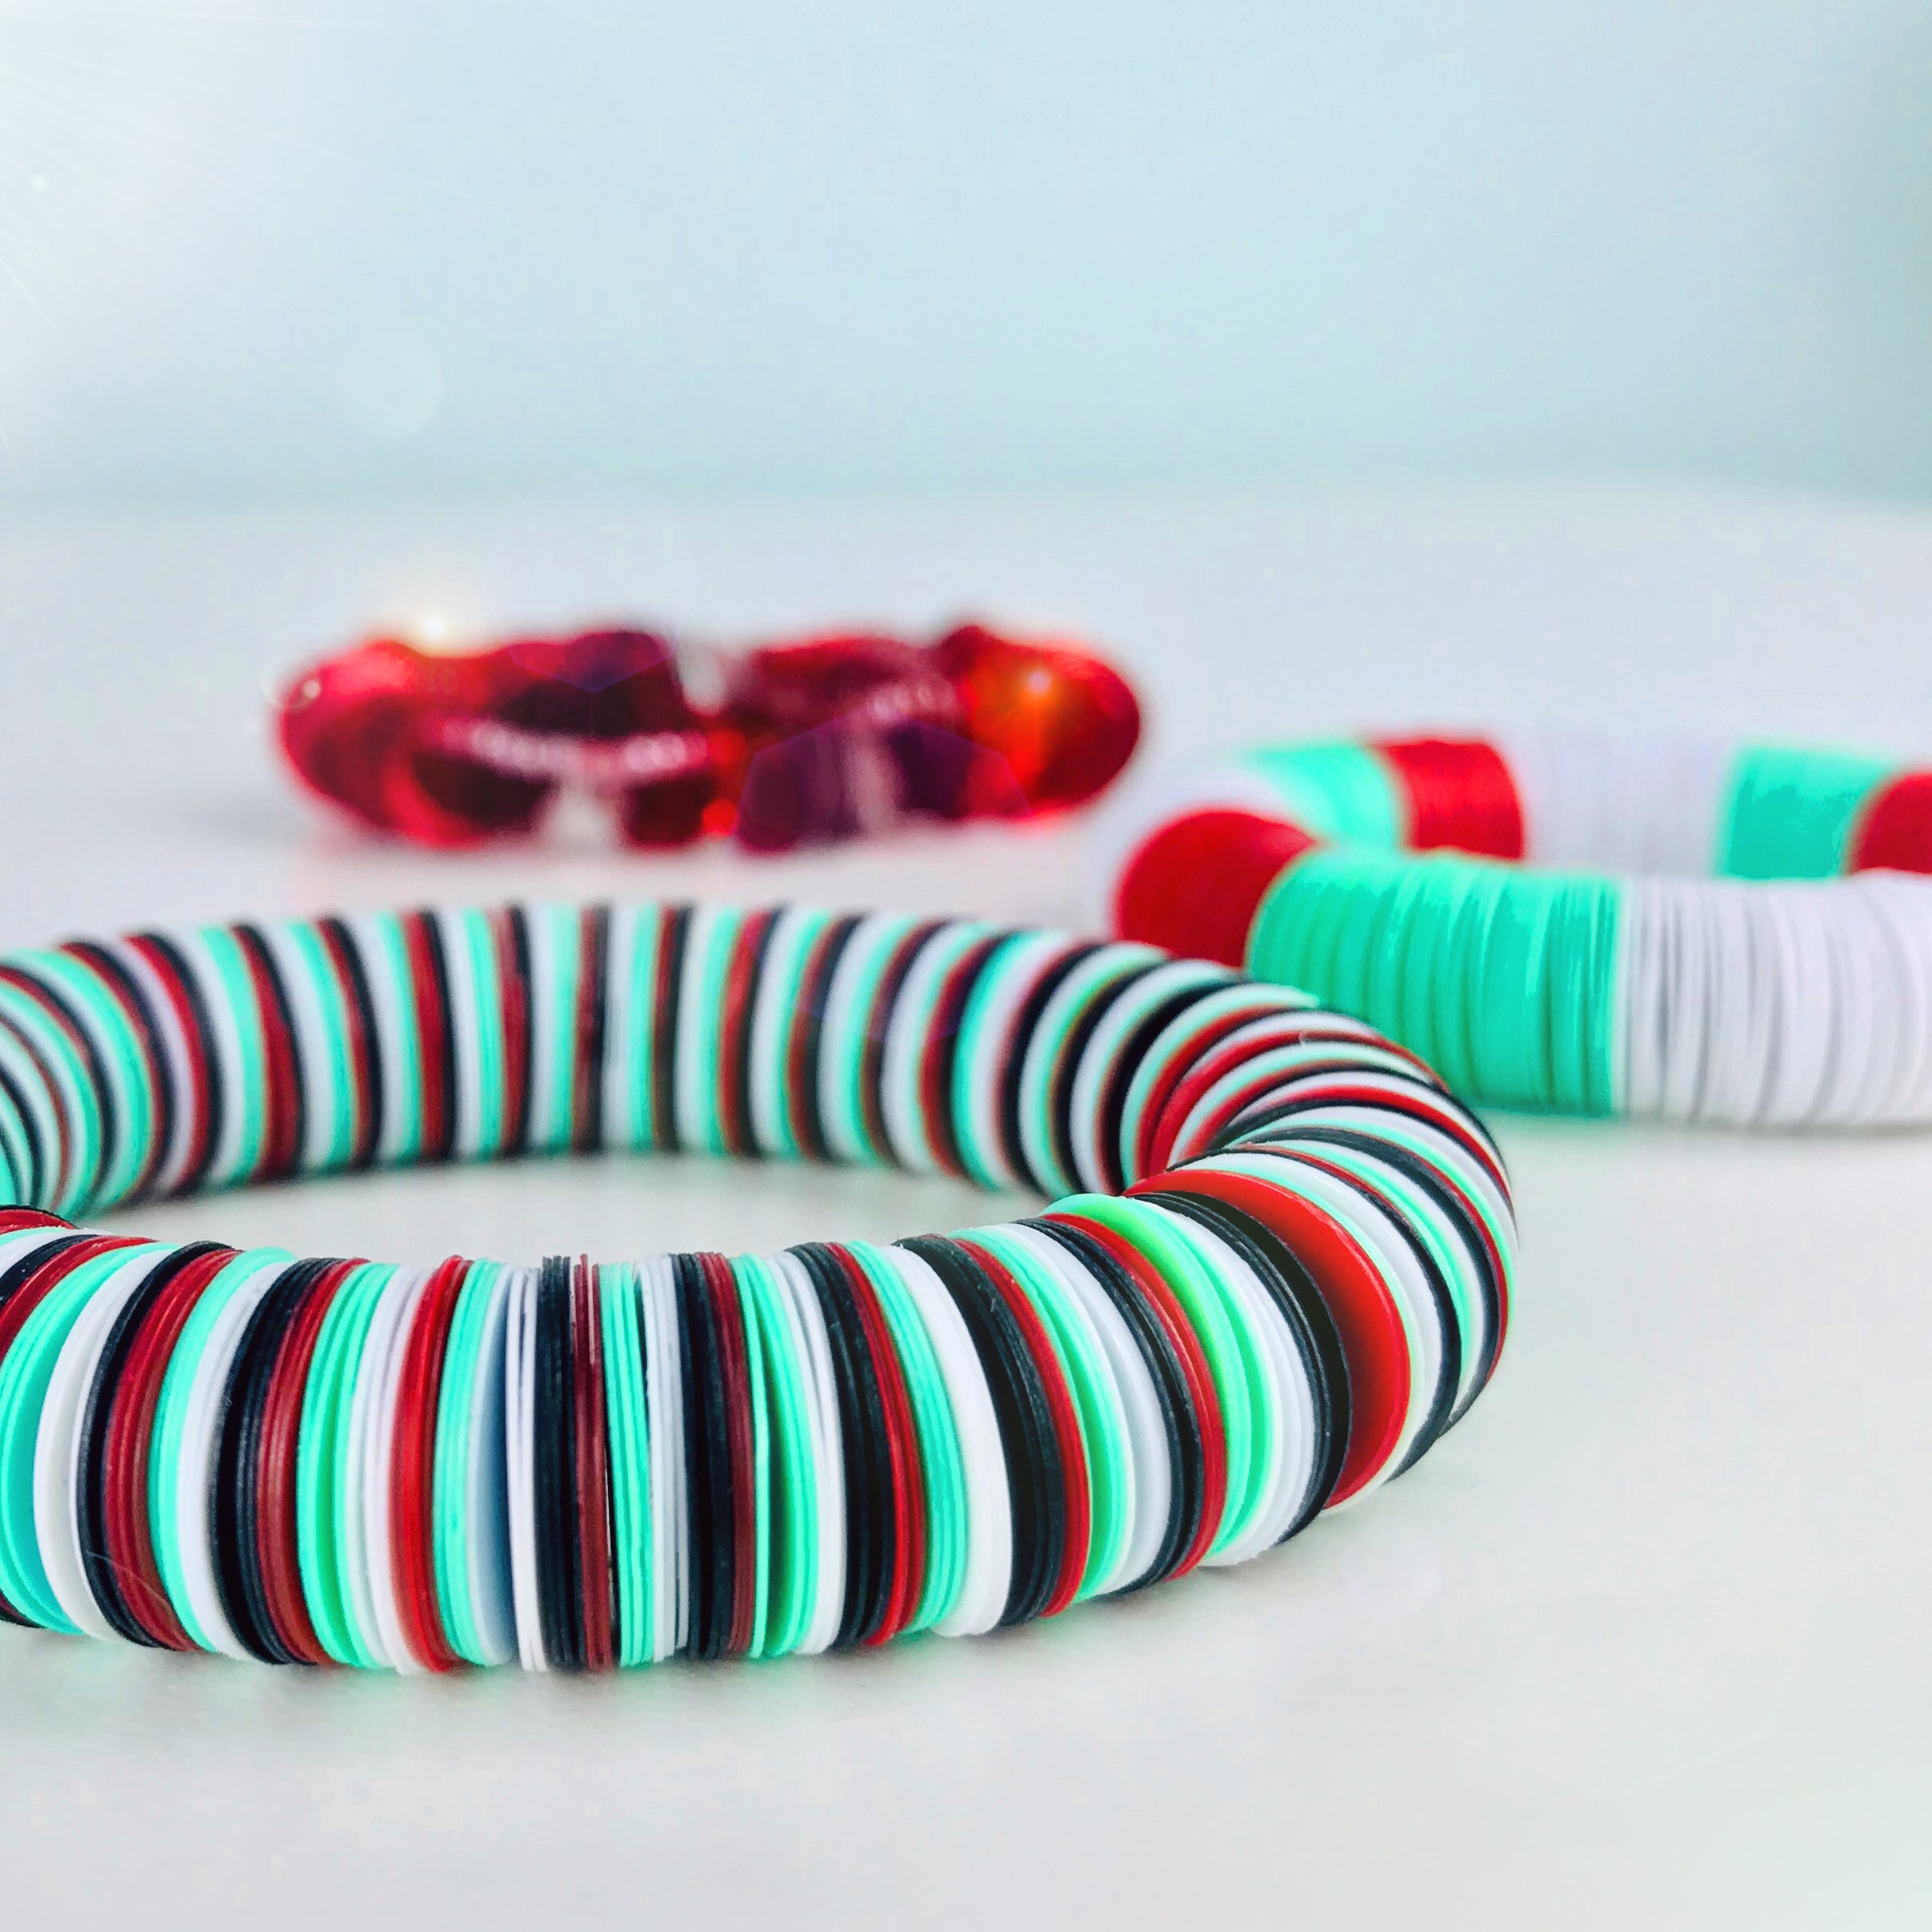 Aanandi entprises Kids Rainbow Rubber Bands for Bracelets Kit with Case  4400 Loom Bands DIY Crafting